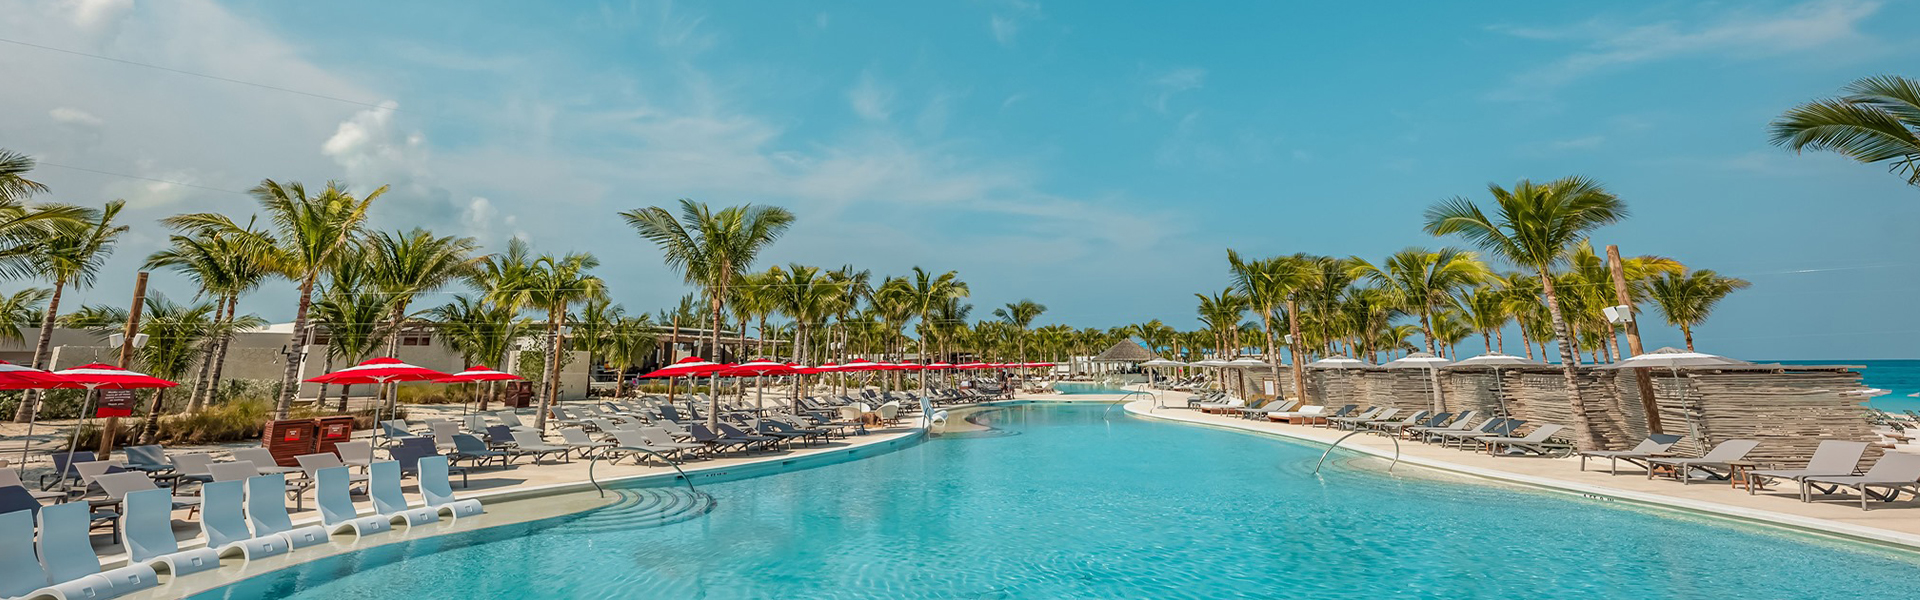 Best-Resort-World-Bimini-Bahamas